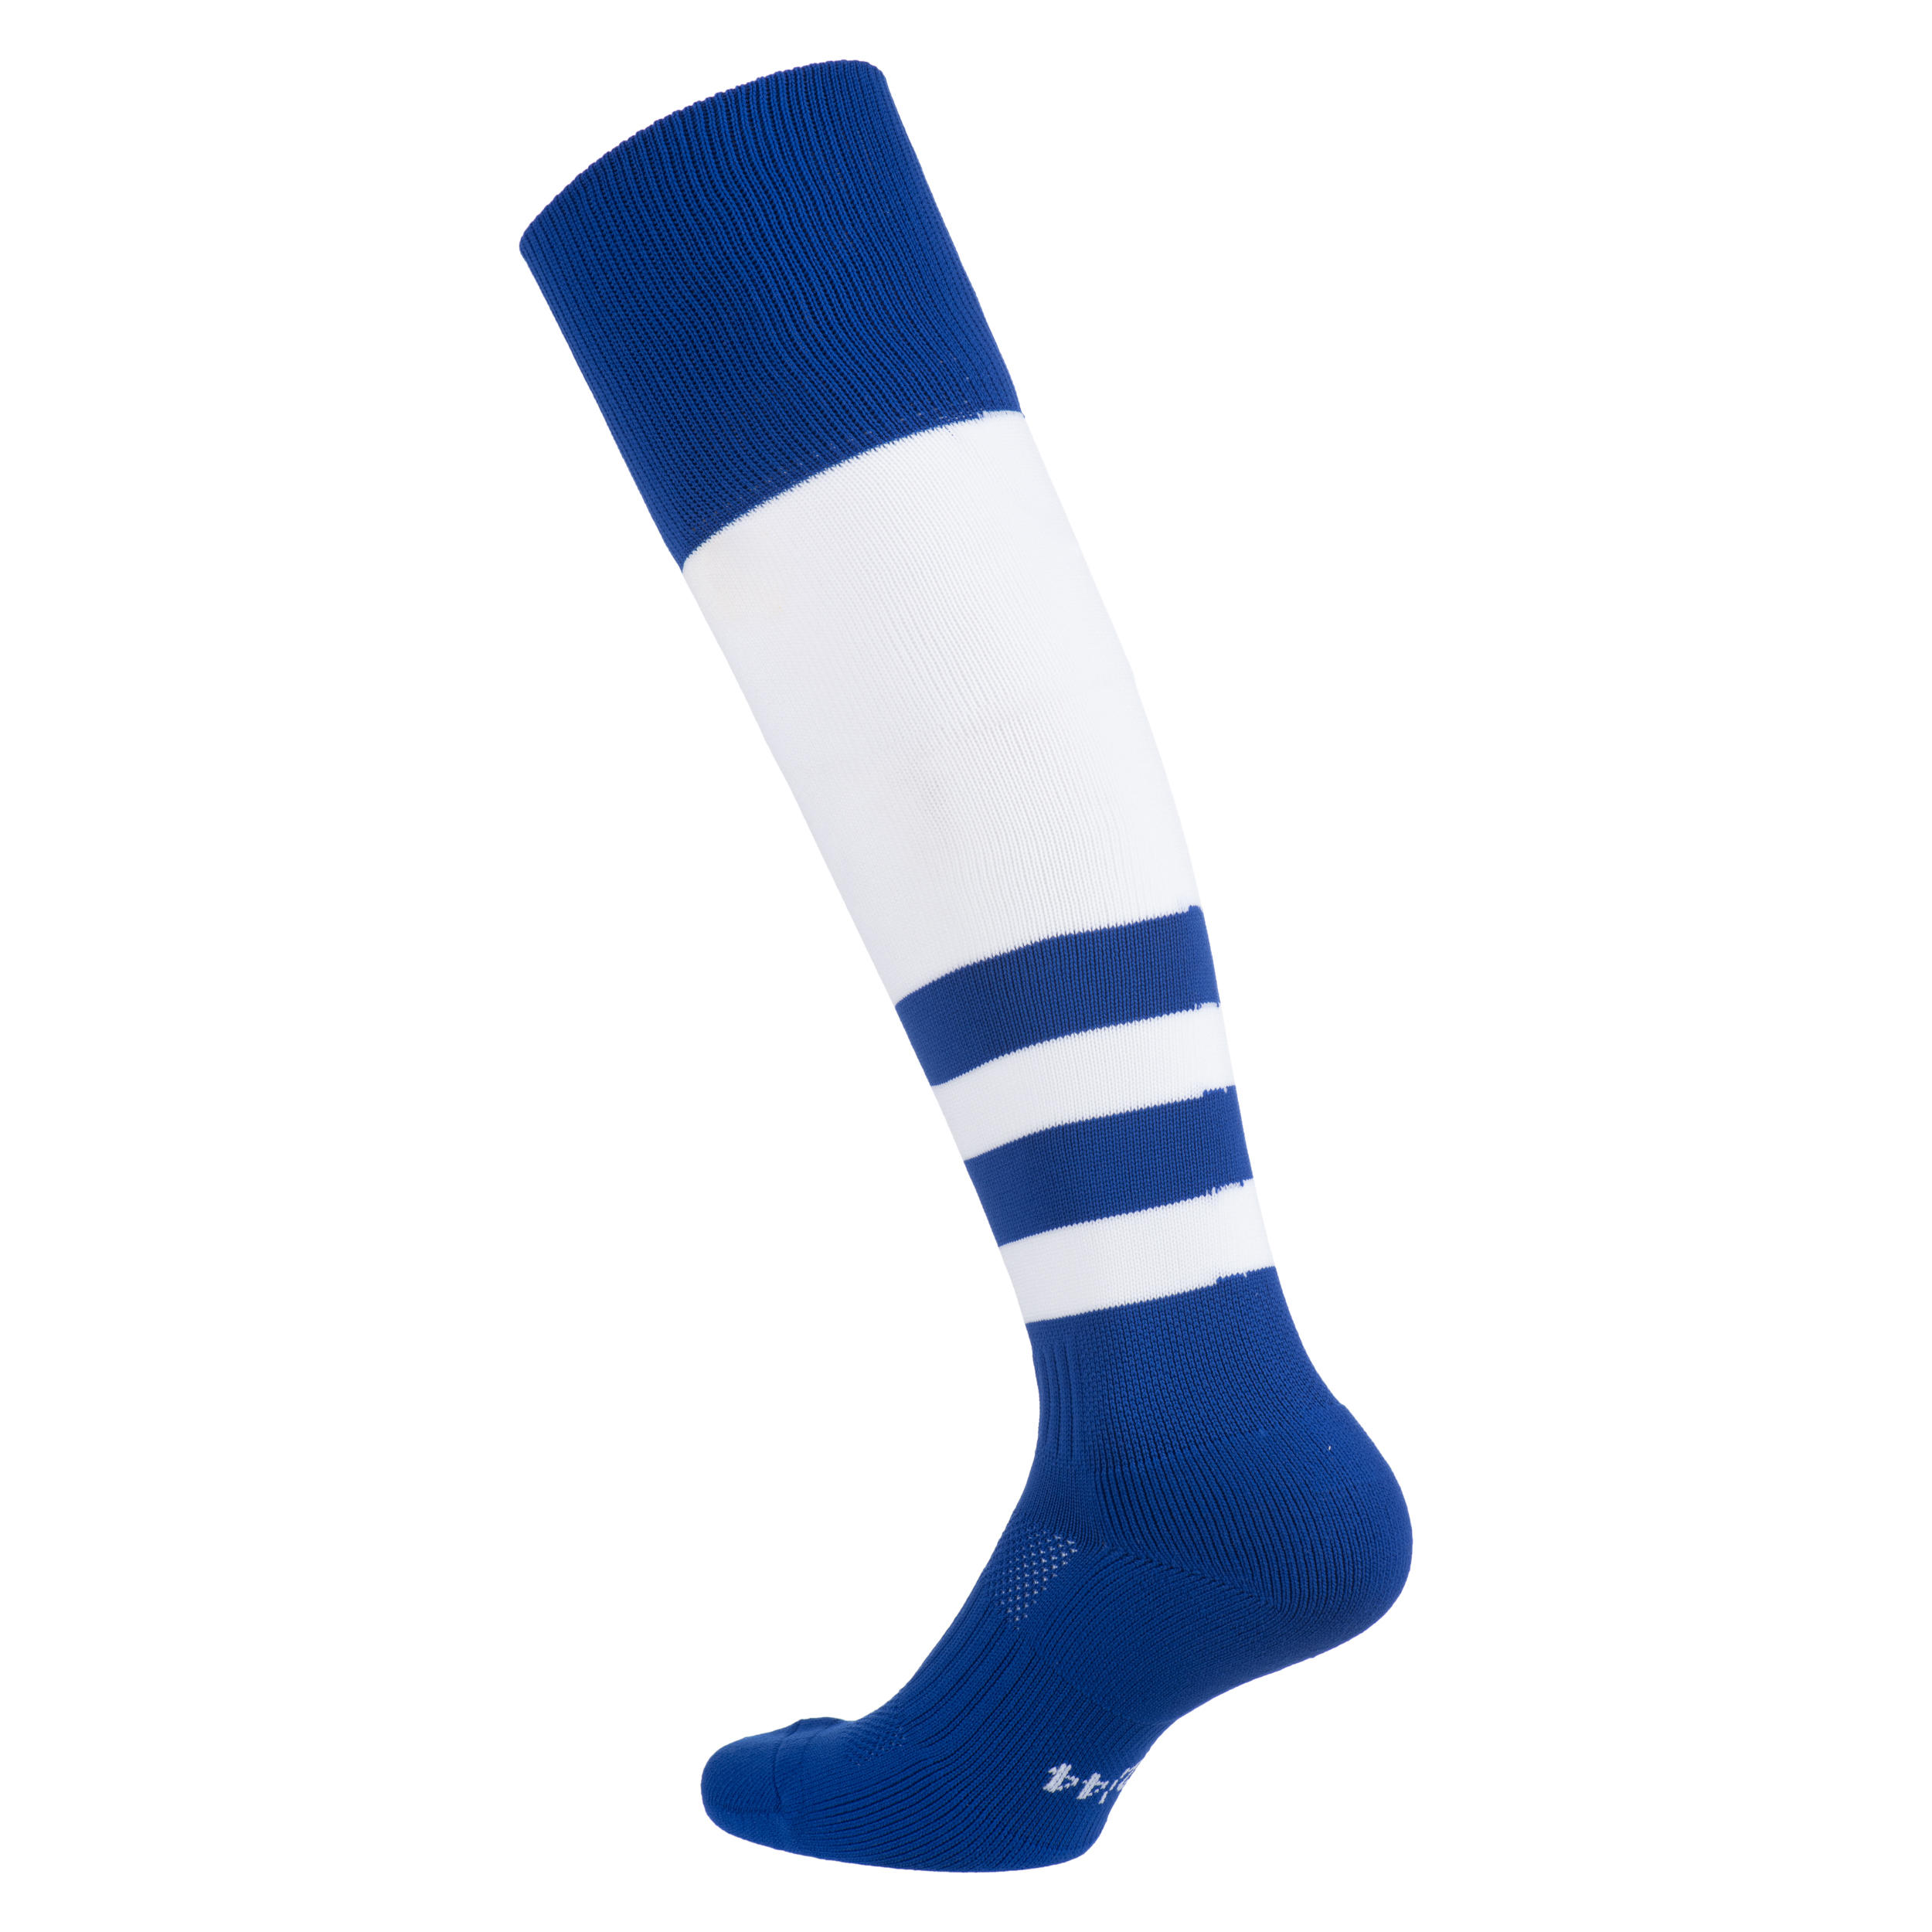 Kids' High Rugby Socks R500 - Blue/White 2/5